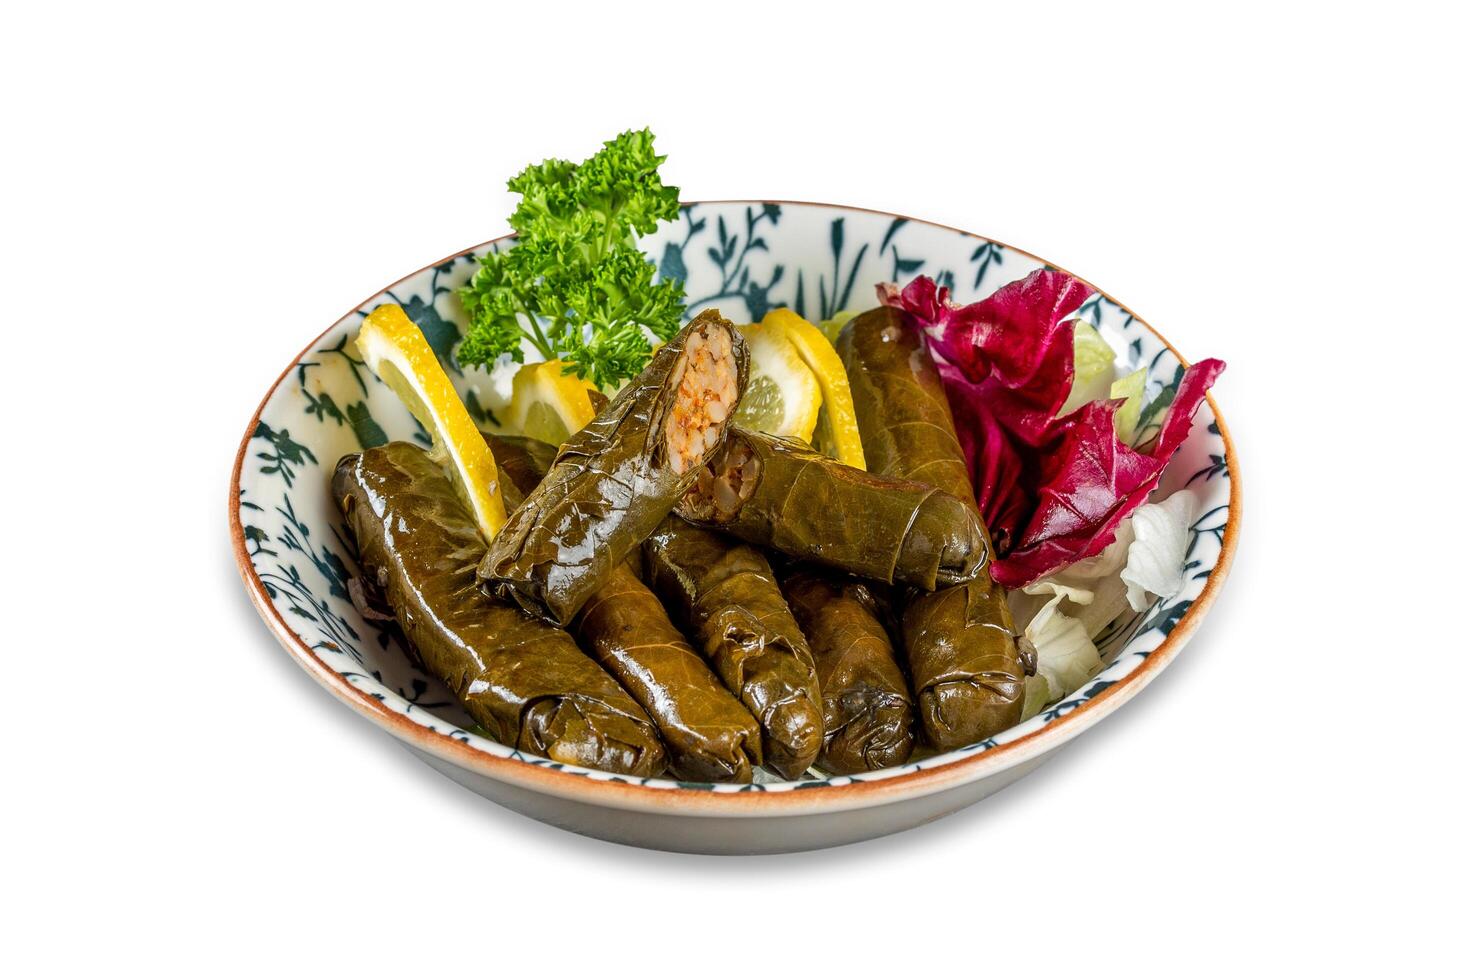 yaprak sarma, tradicional turco cocina manjares delicioso dolma o samra relleno uva hojas arroz, blanco yogur salsa. foto